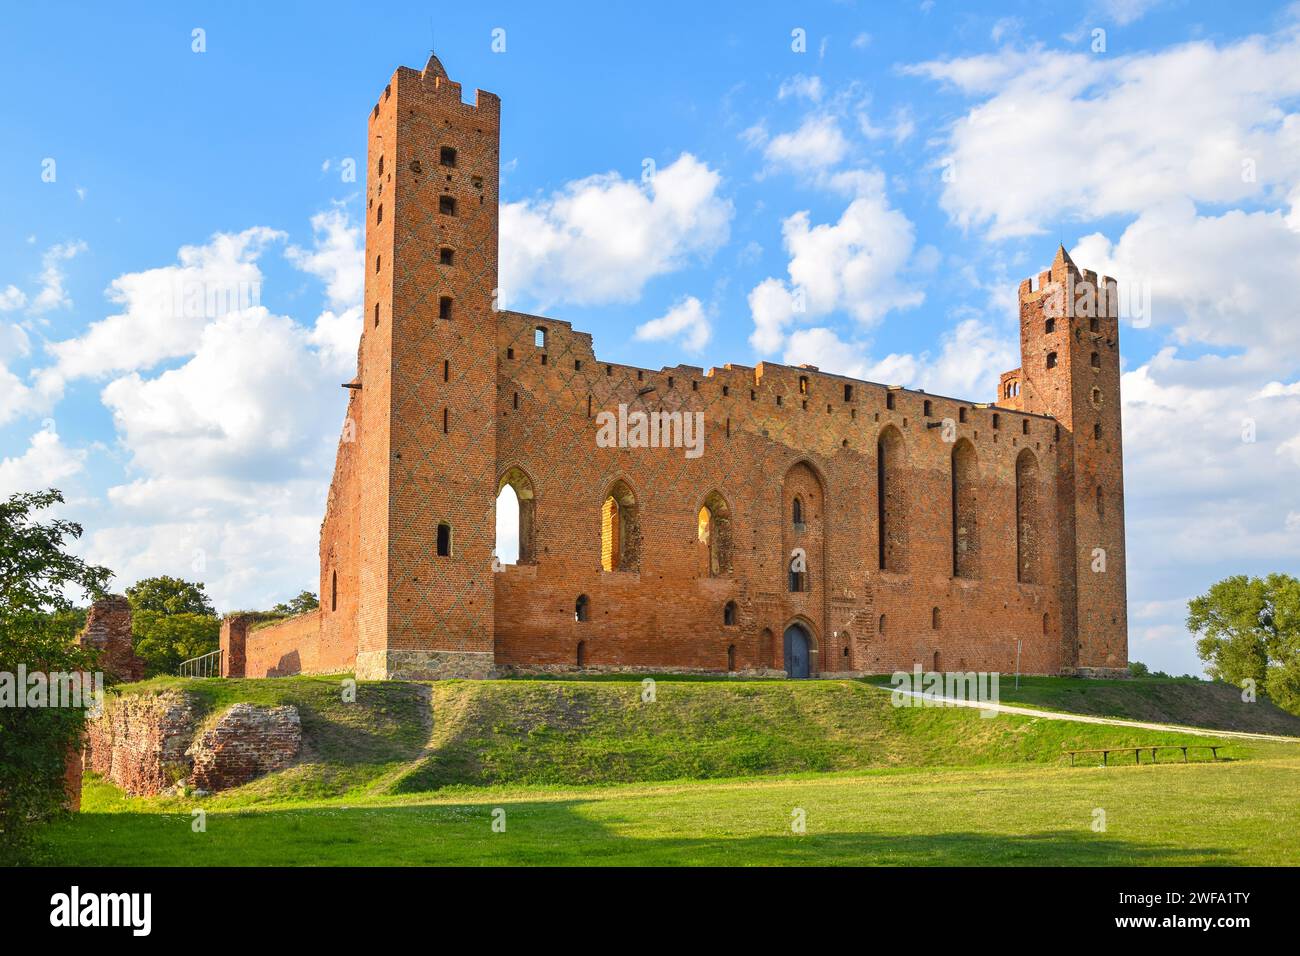 Ruins of the Teutonic castle in Radzyń Chełmiński, Kuyavian-Pomeranian Voivodeship, Poland. Stock Photo